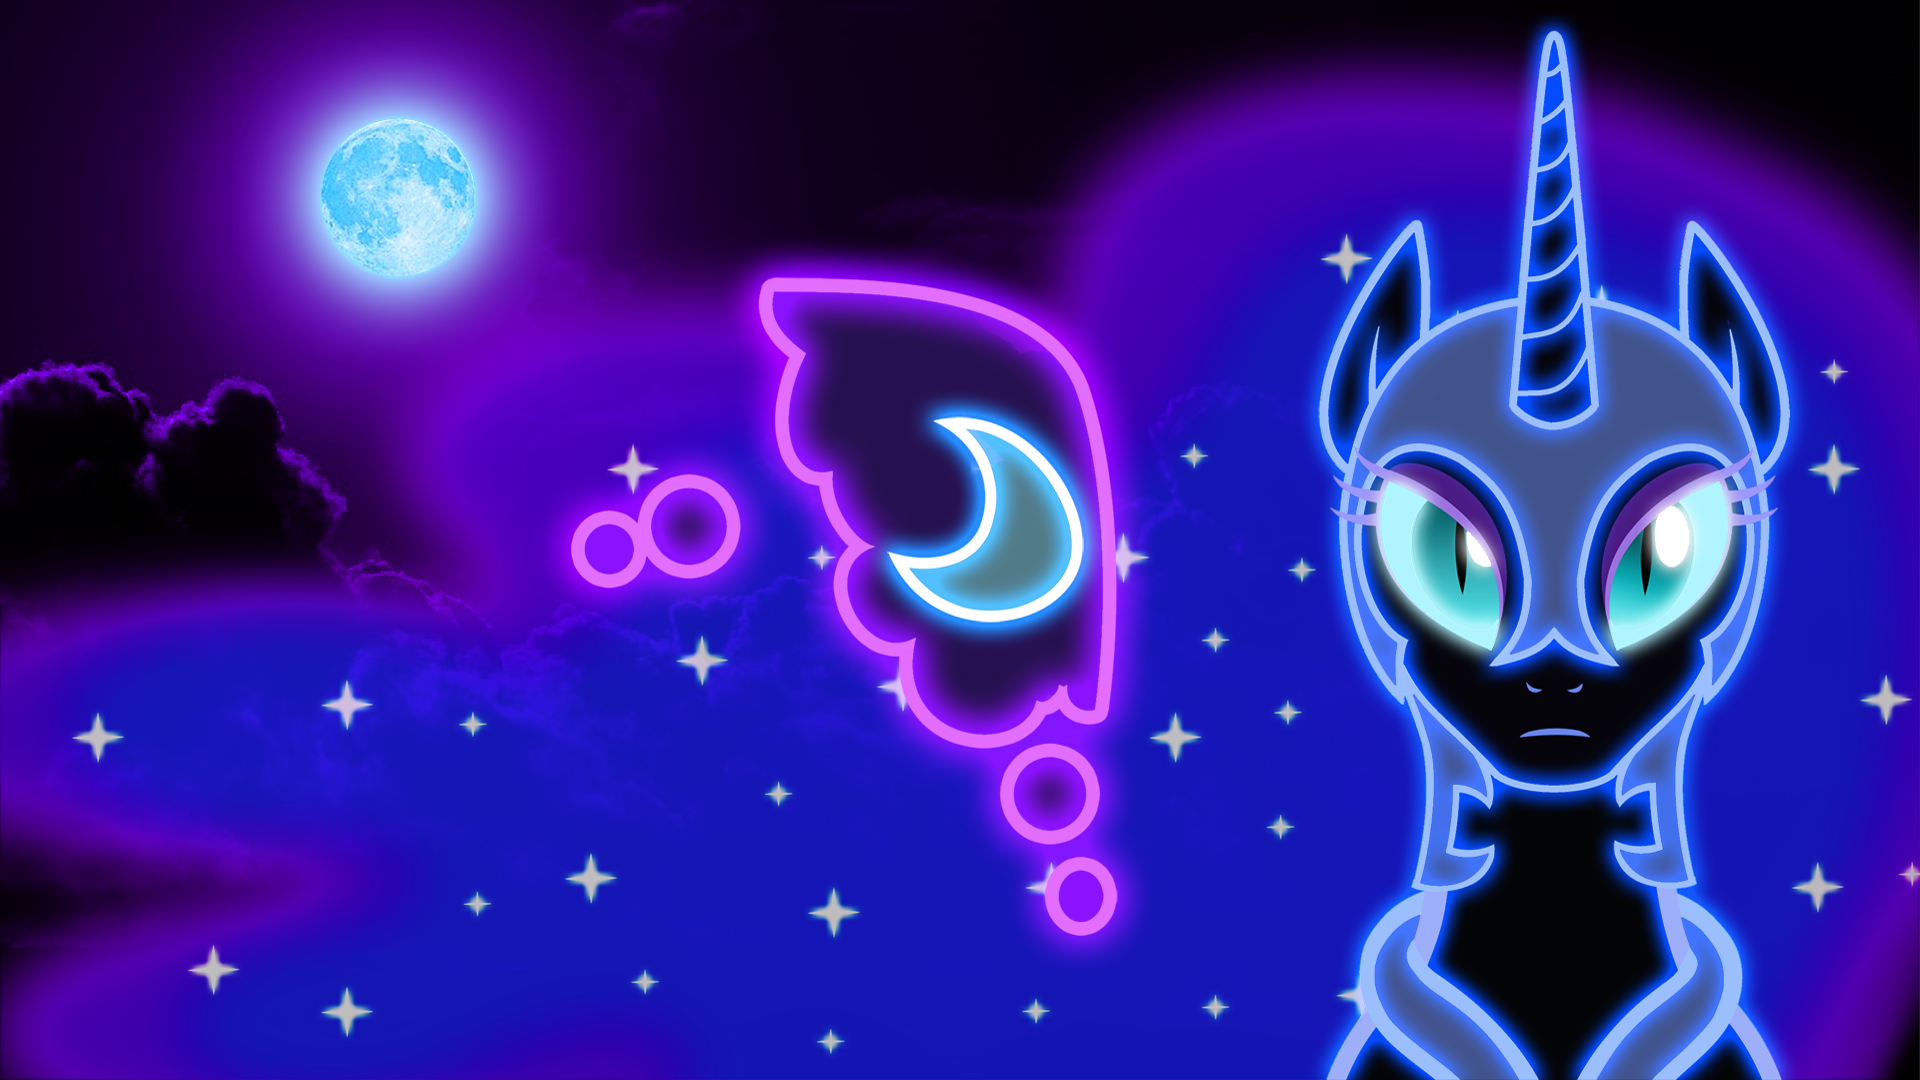 Neon Nightmare Moon Wallpaper by ultimateultimate